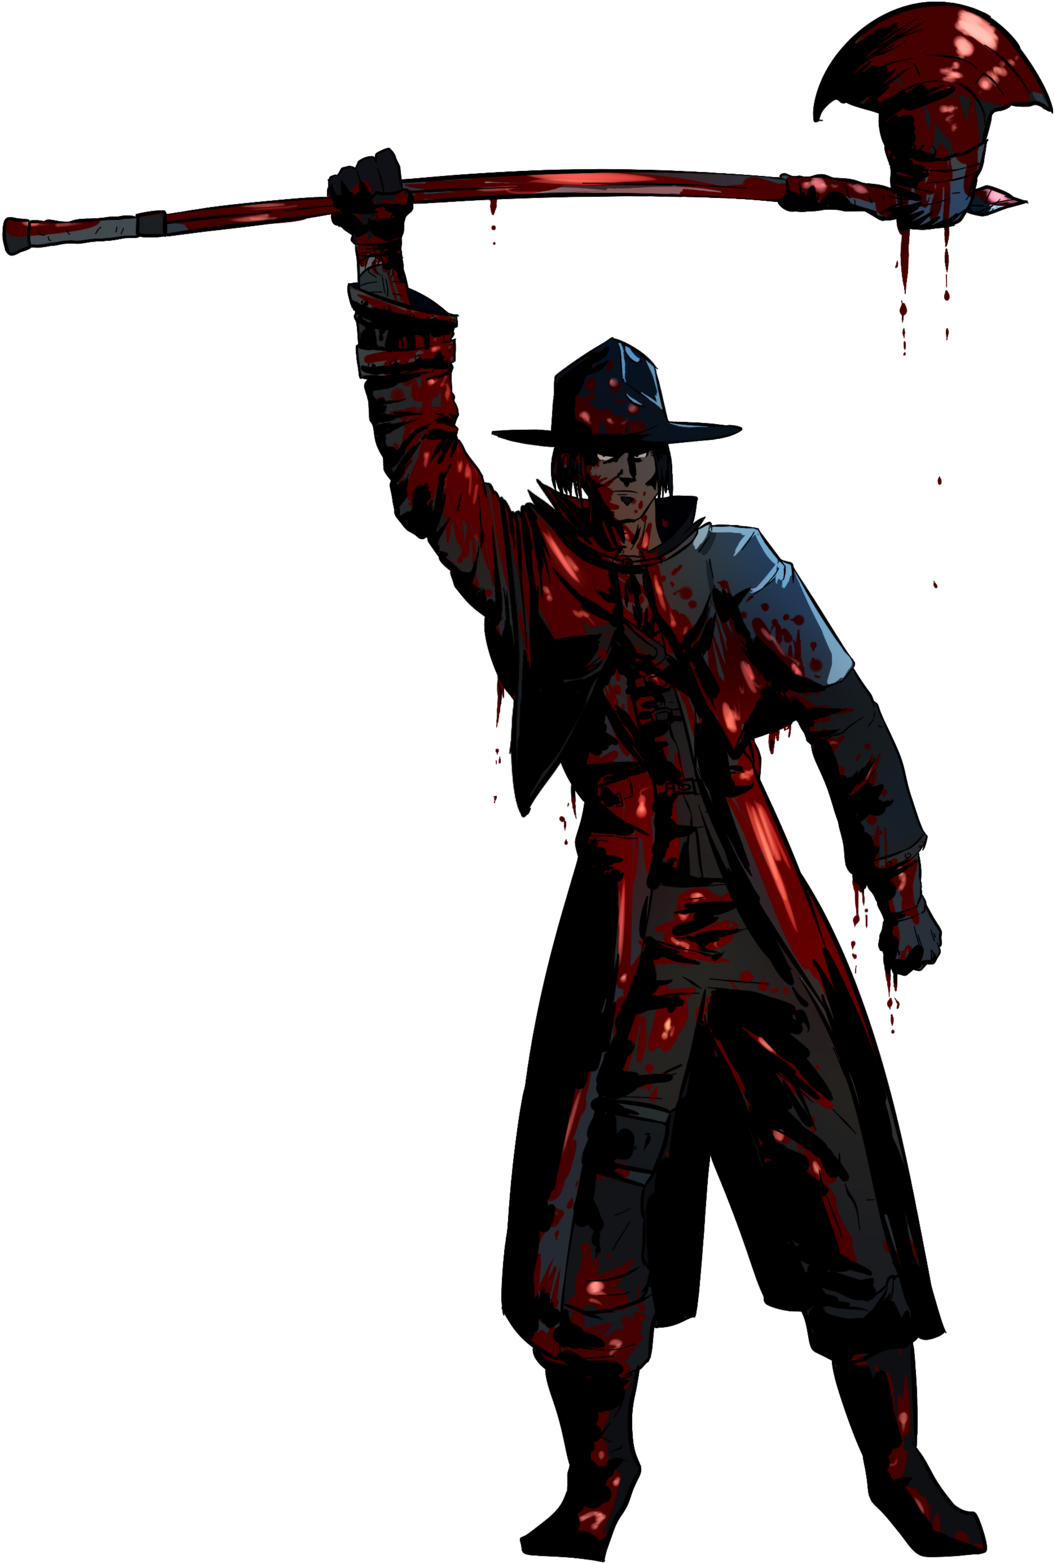 Bloodborne PNG HD Image